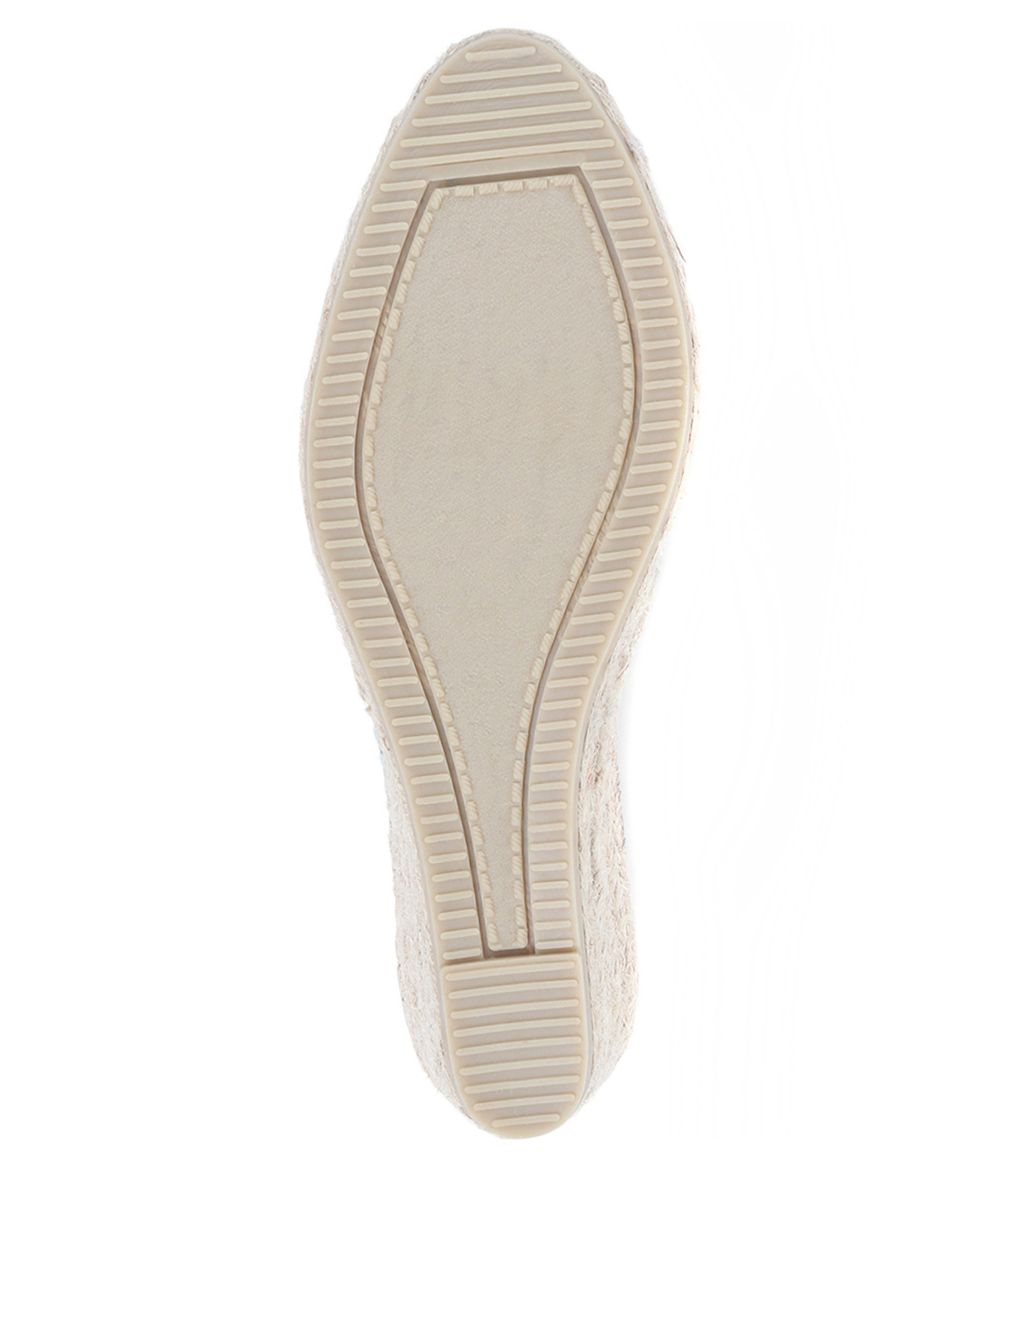 Suede Slingback Wedge Sandals image 5